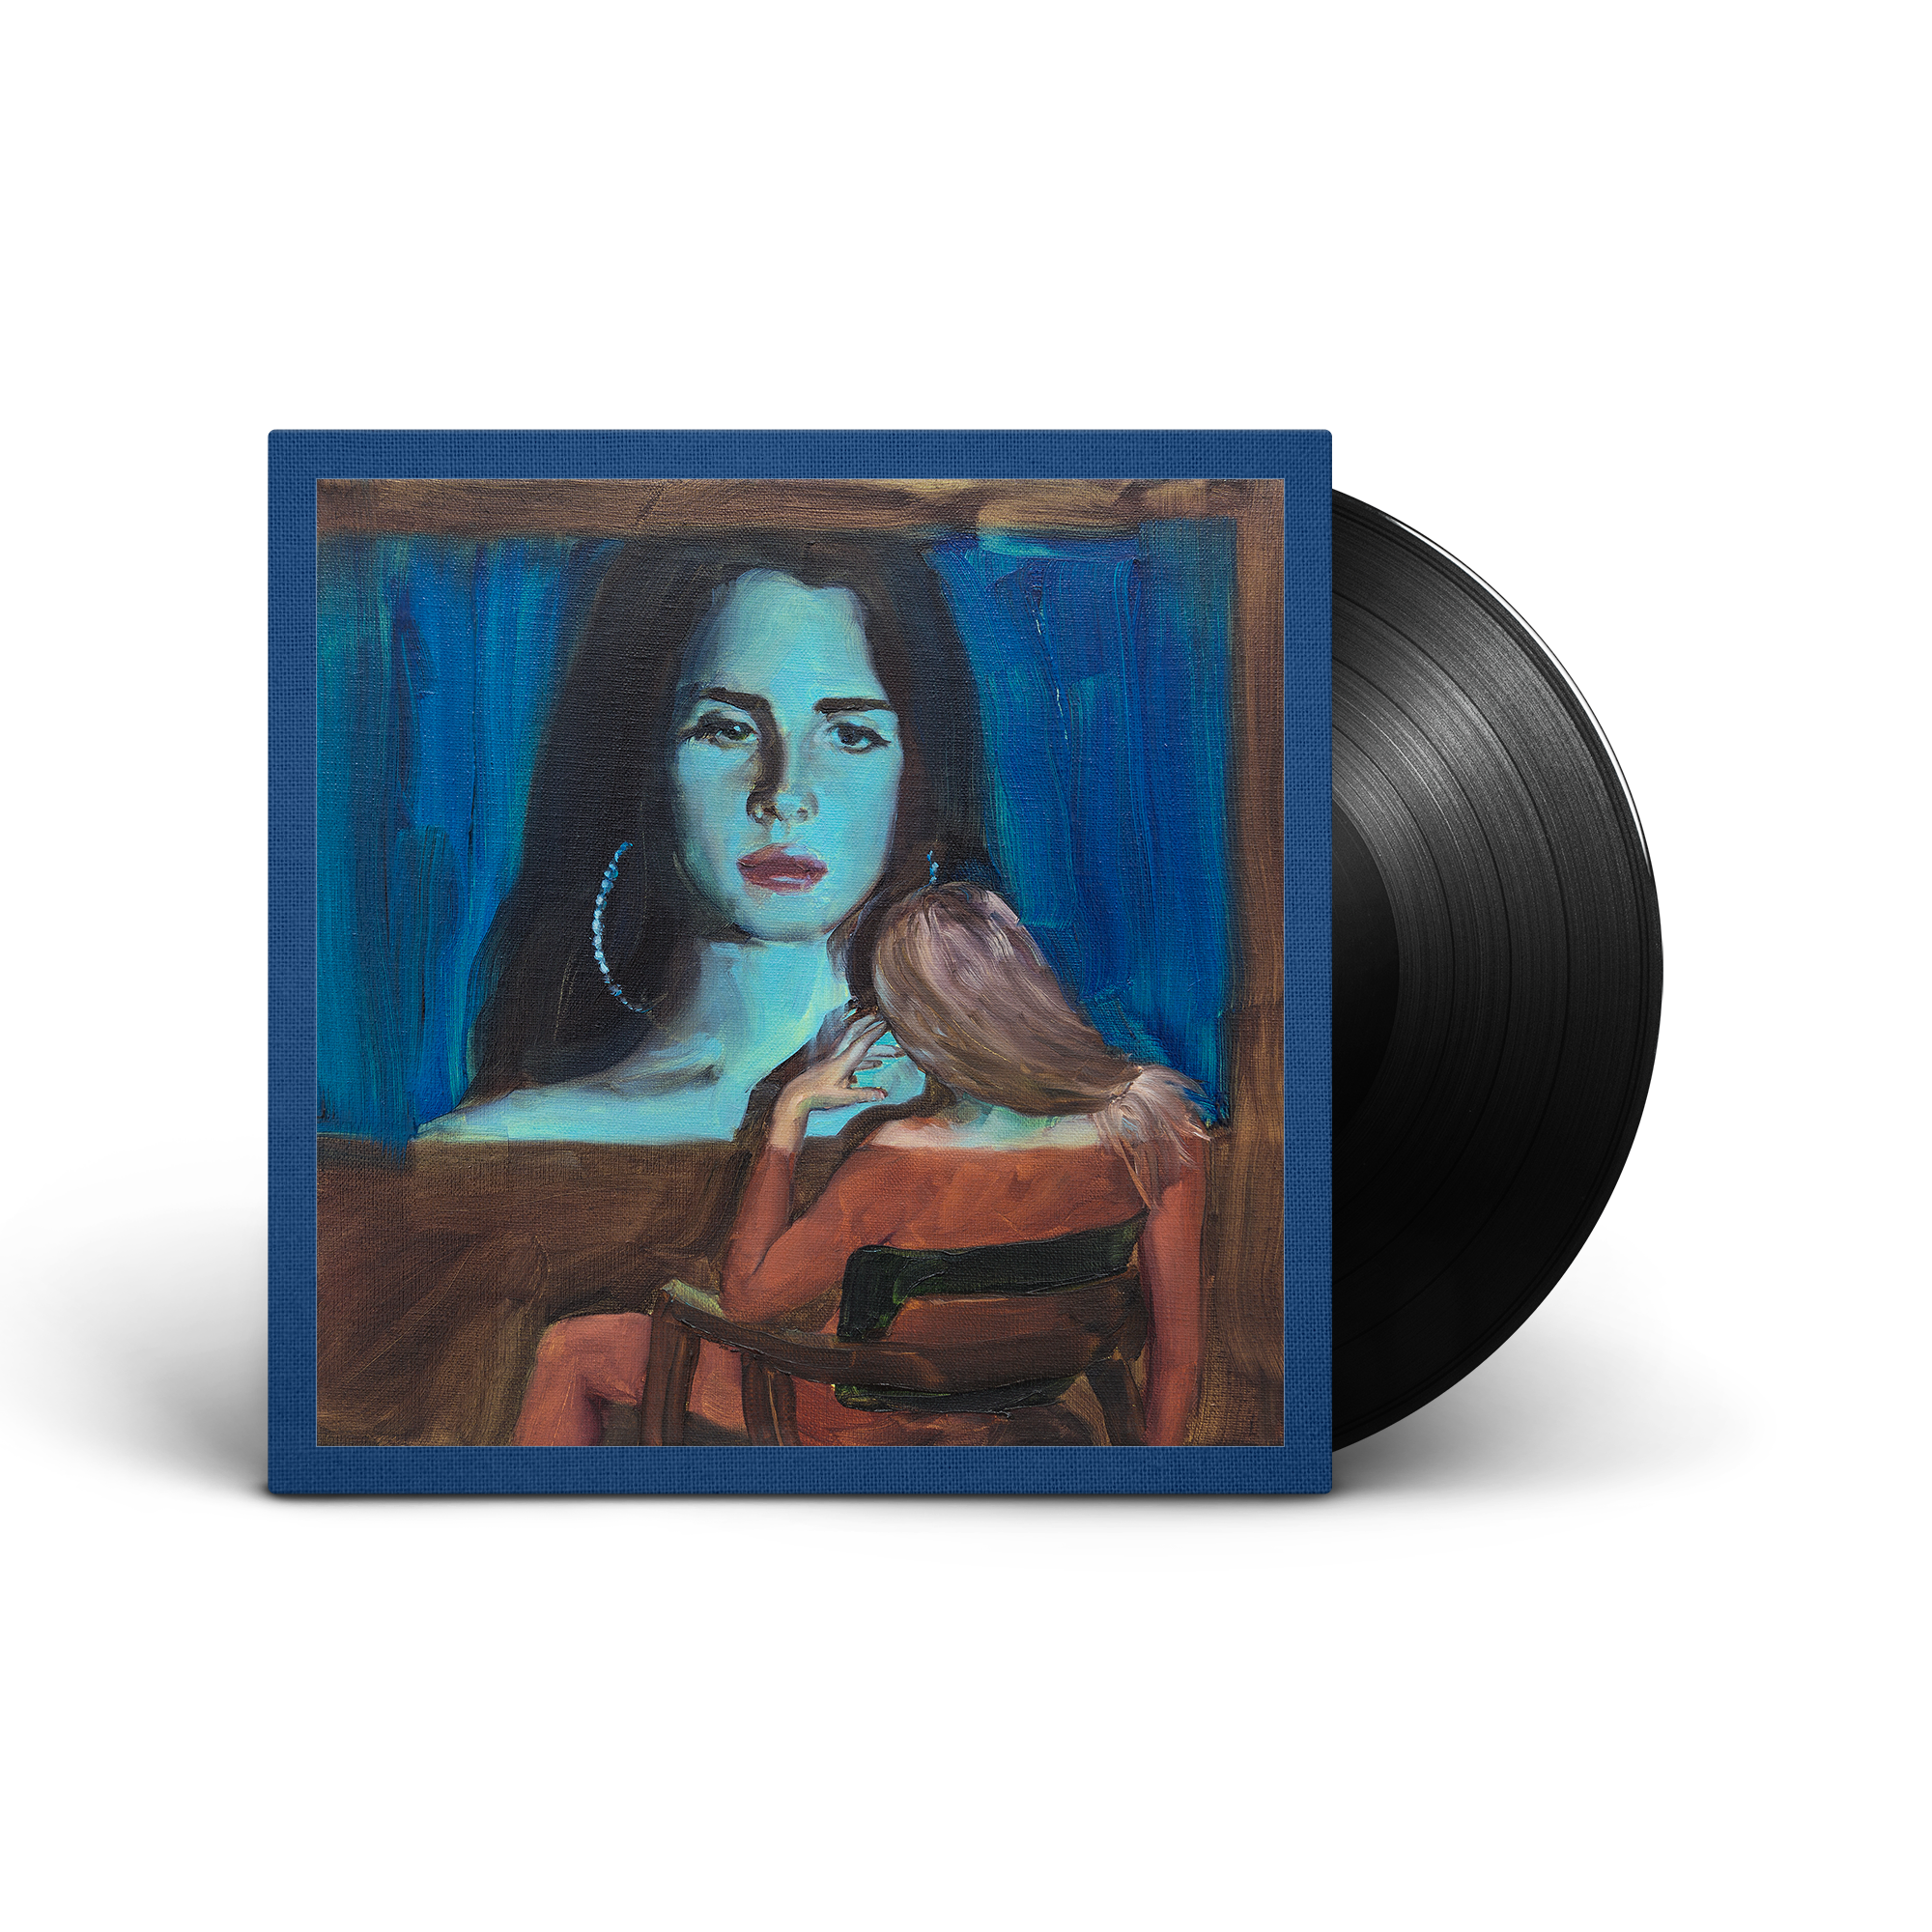 Lana Del Rey - Born To Die (Target Exclusive, Vinyl)